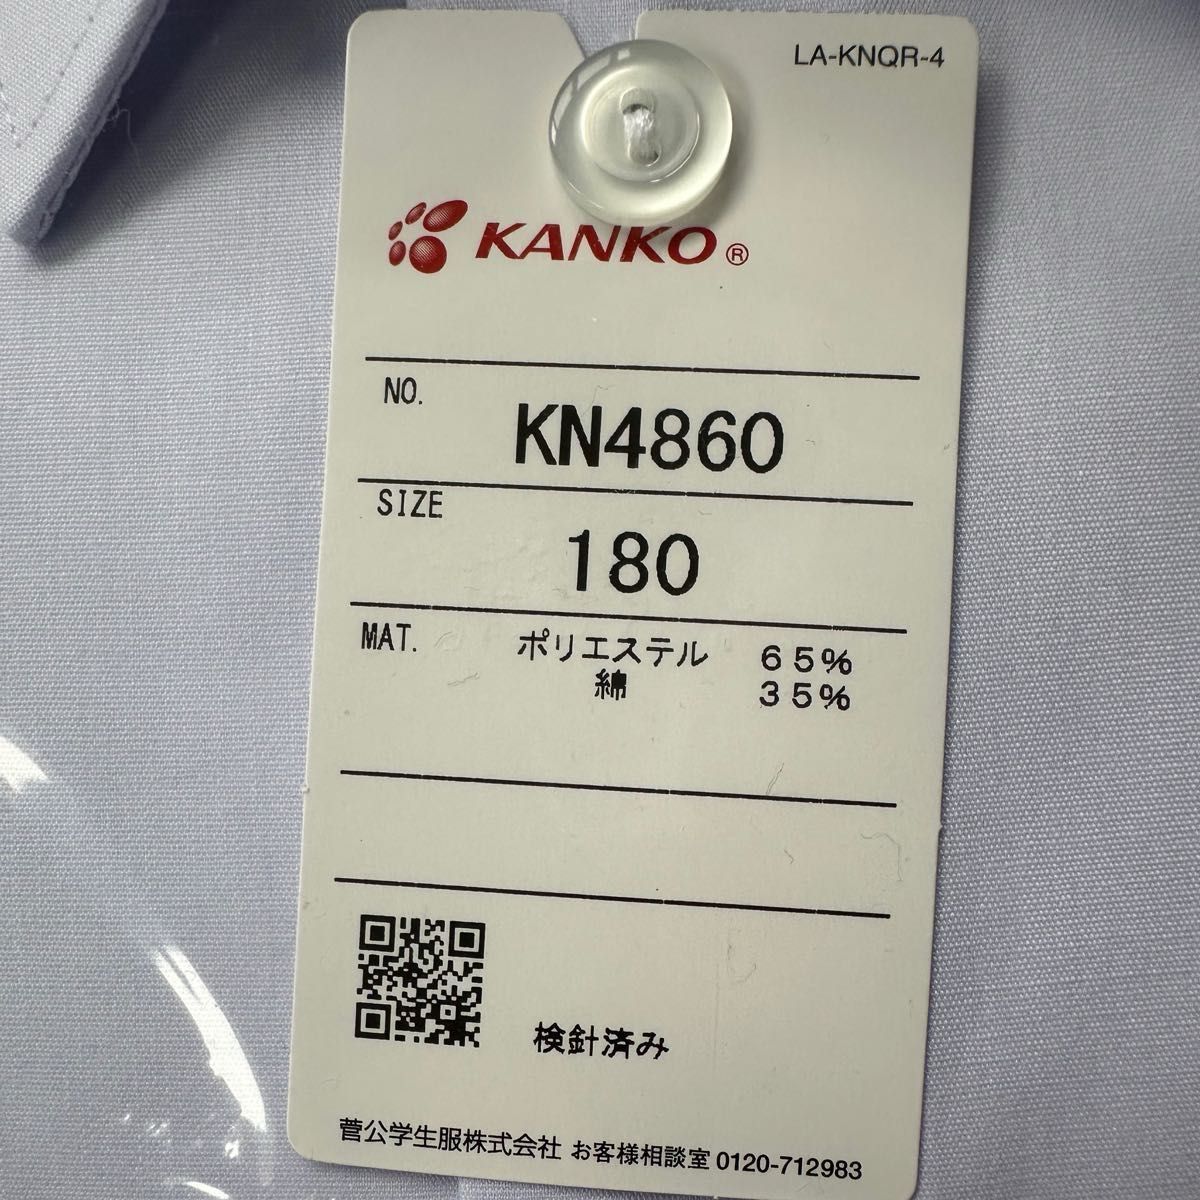 KANKO カンコー 男子 半袖 スクール シャツ ホワイト 学生 学校 白 制服 KN4860 カッターシャツ ワイシャツ B